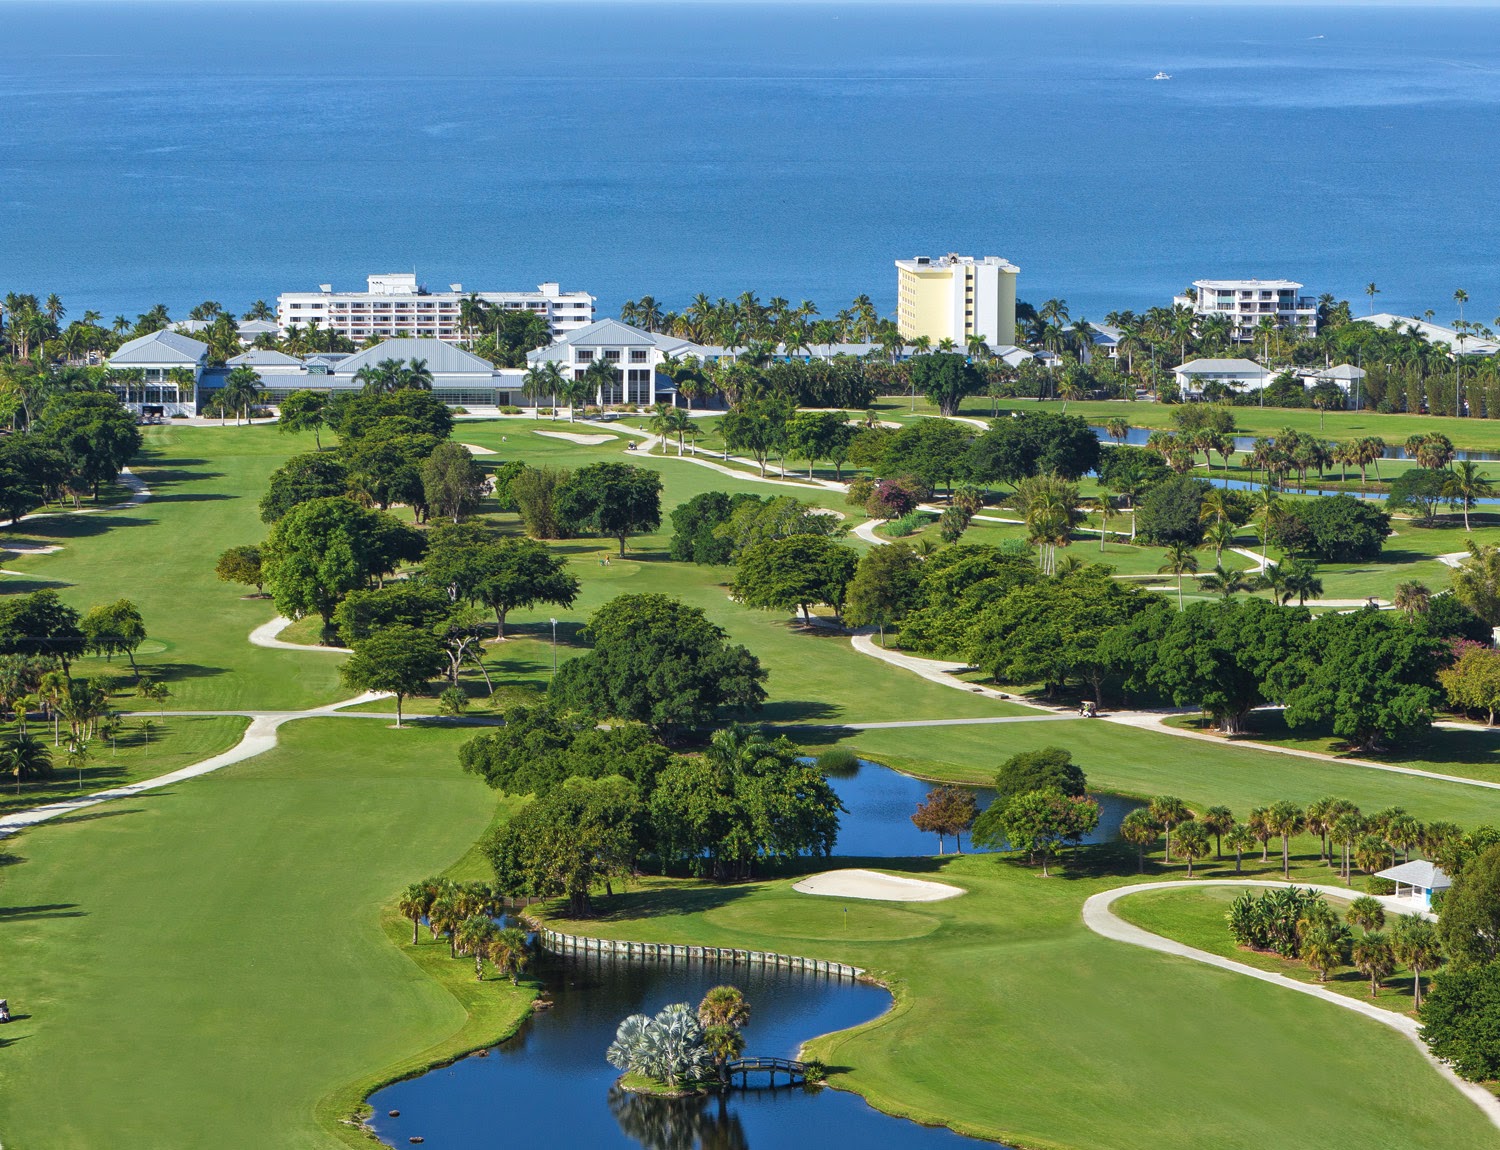 Pennsylvania & Beyond Travel Blog: The Naples Beach Hotel & Golf Club